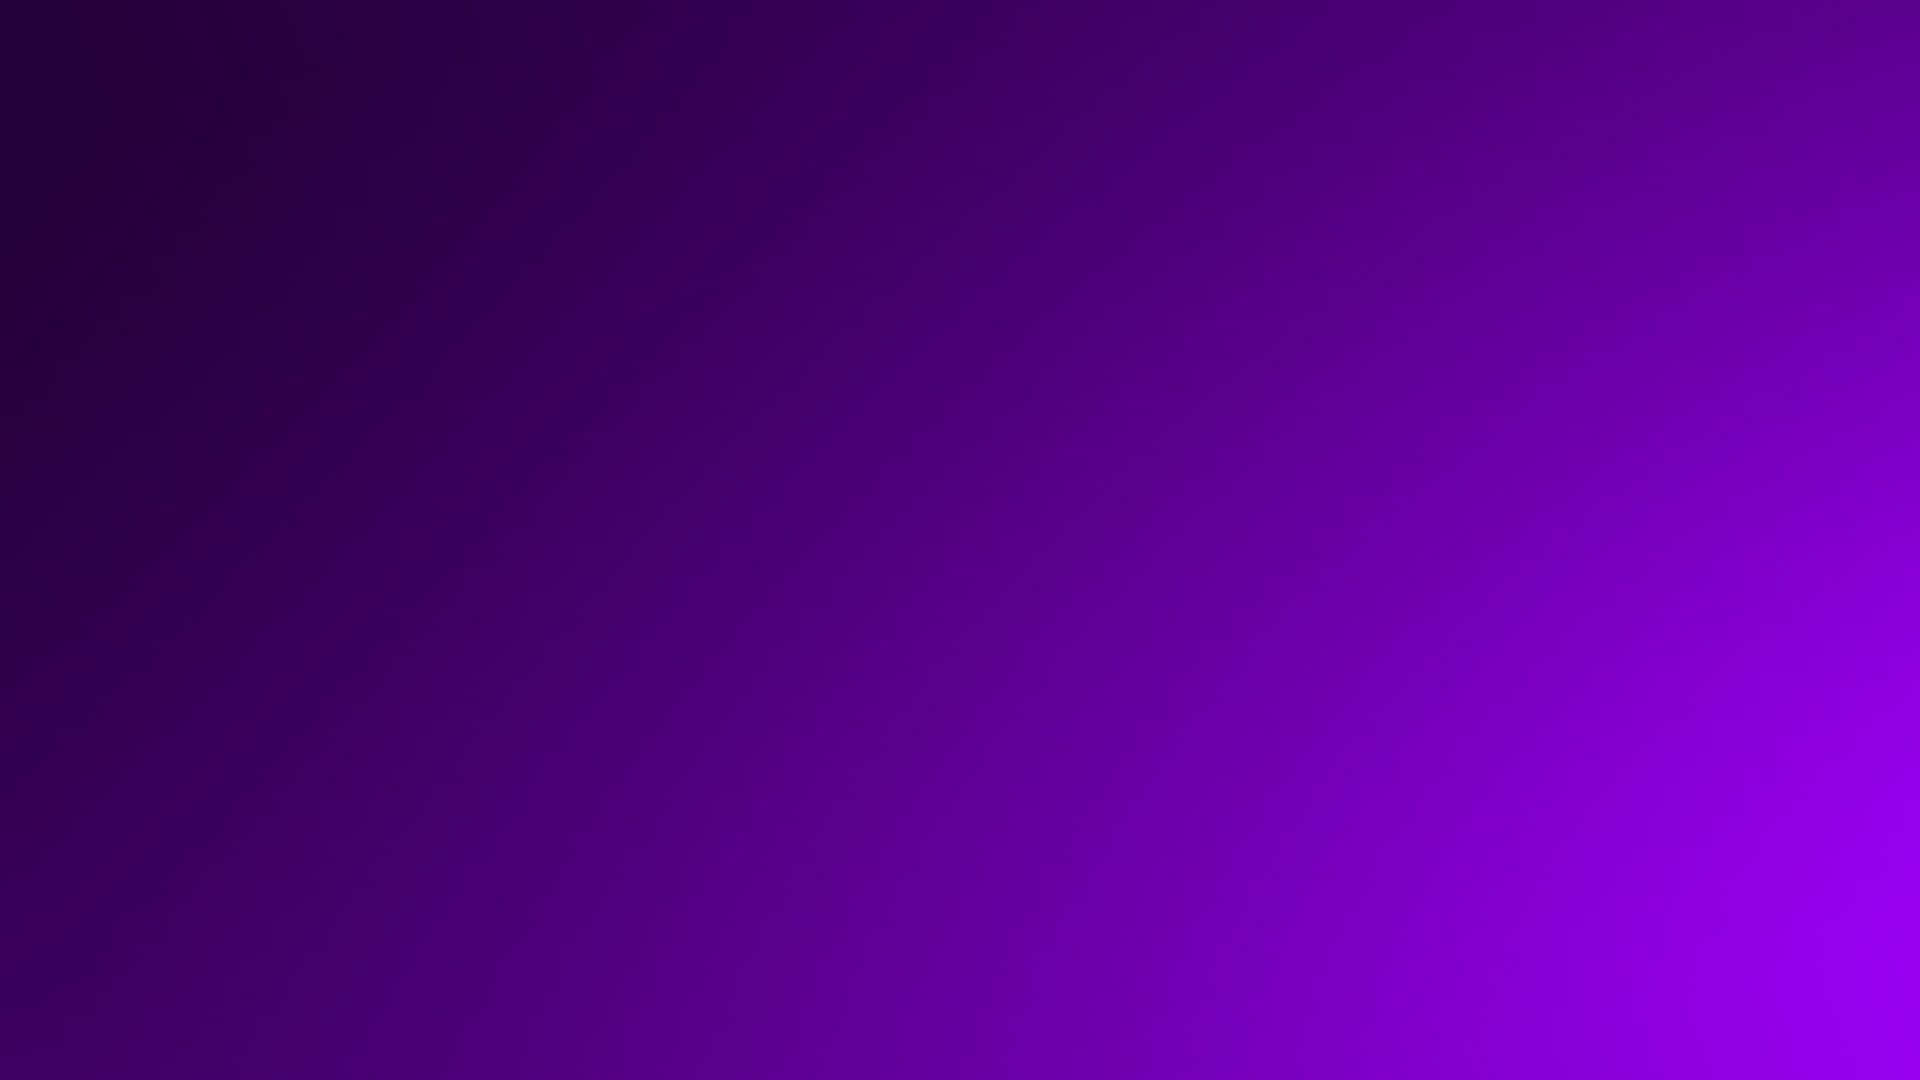 Purple Background With A Light Purple Color